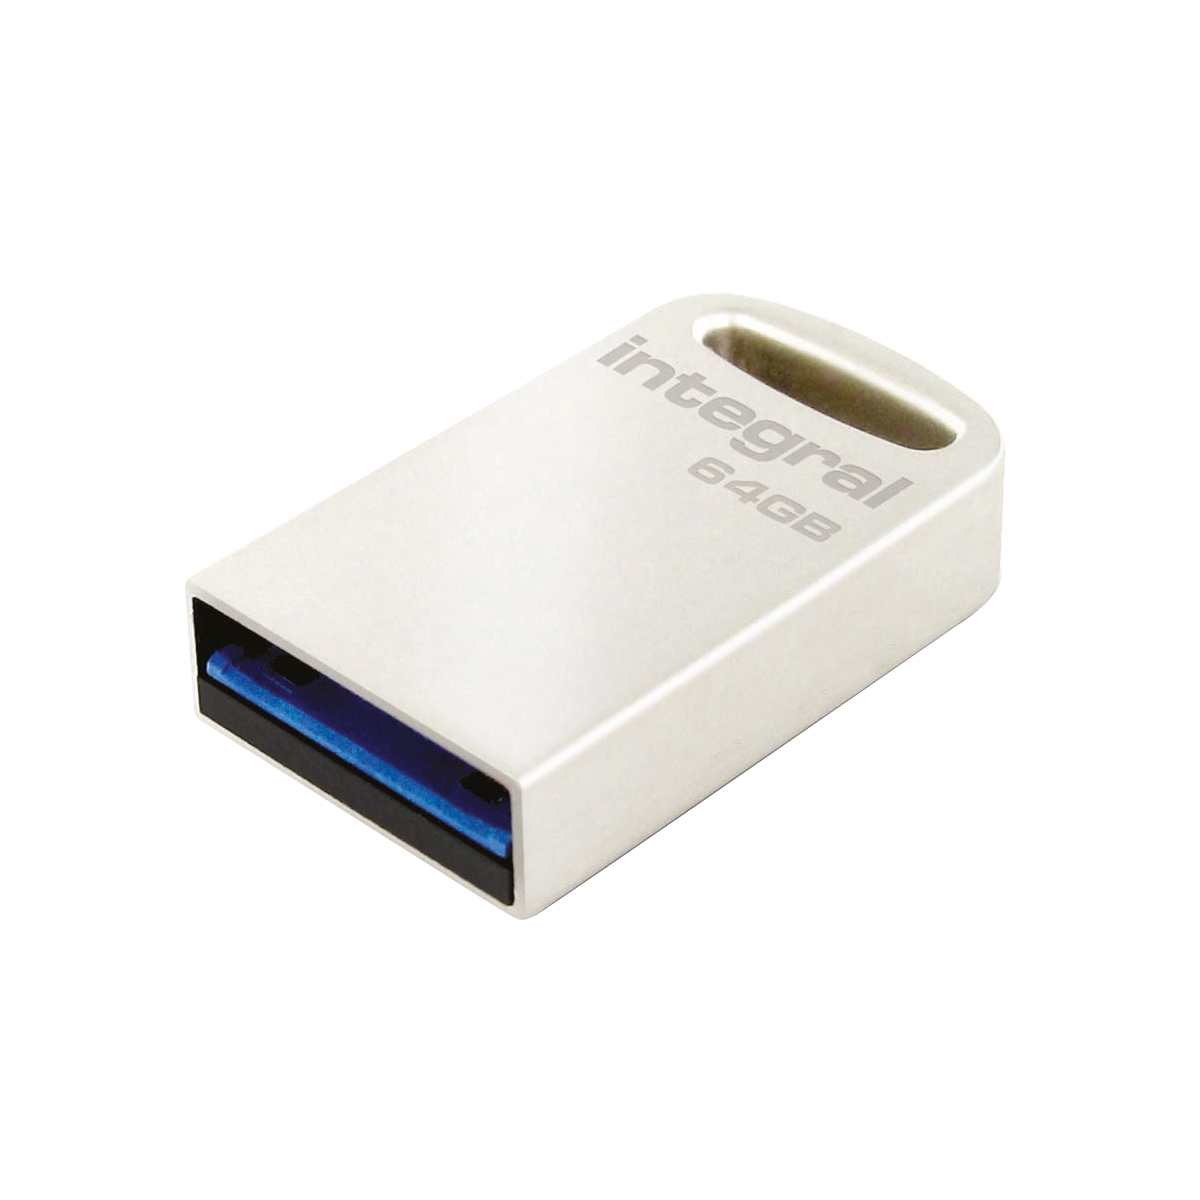 Integral Metal Fusion USB 3.0 Flash Drive - Silver - 64GB